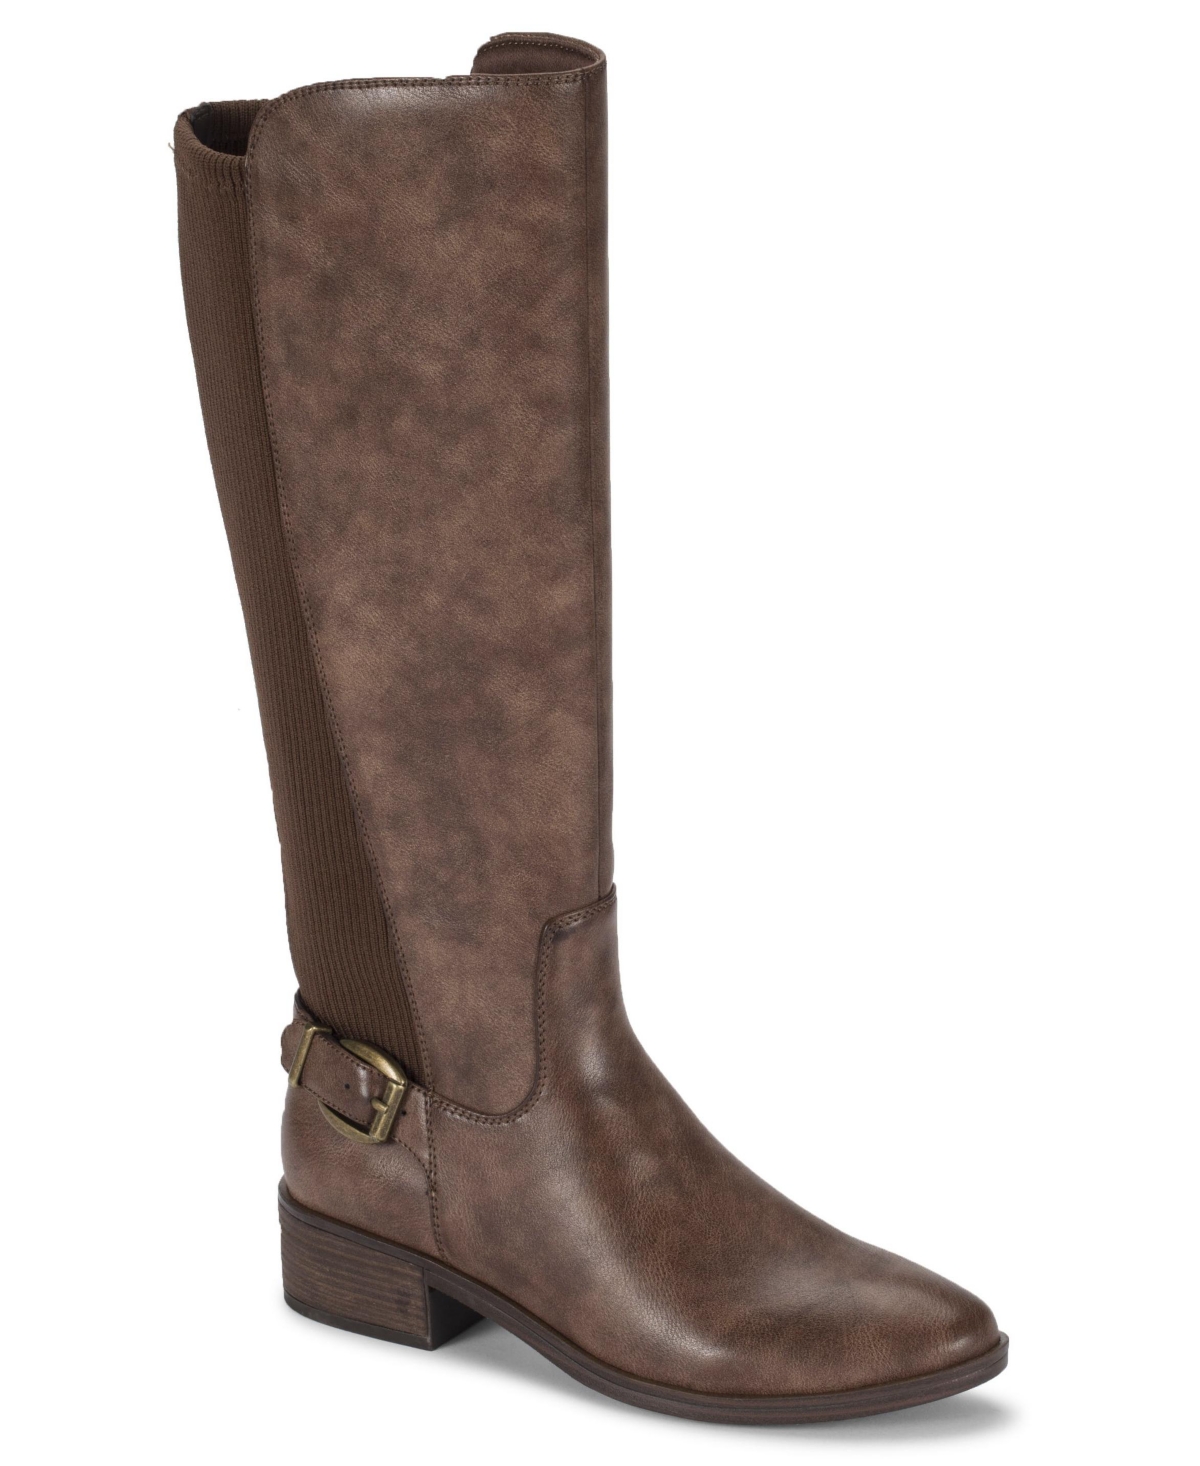 Mckayla Tall Riding Boots - Dark Brown